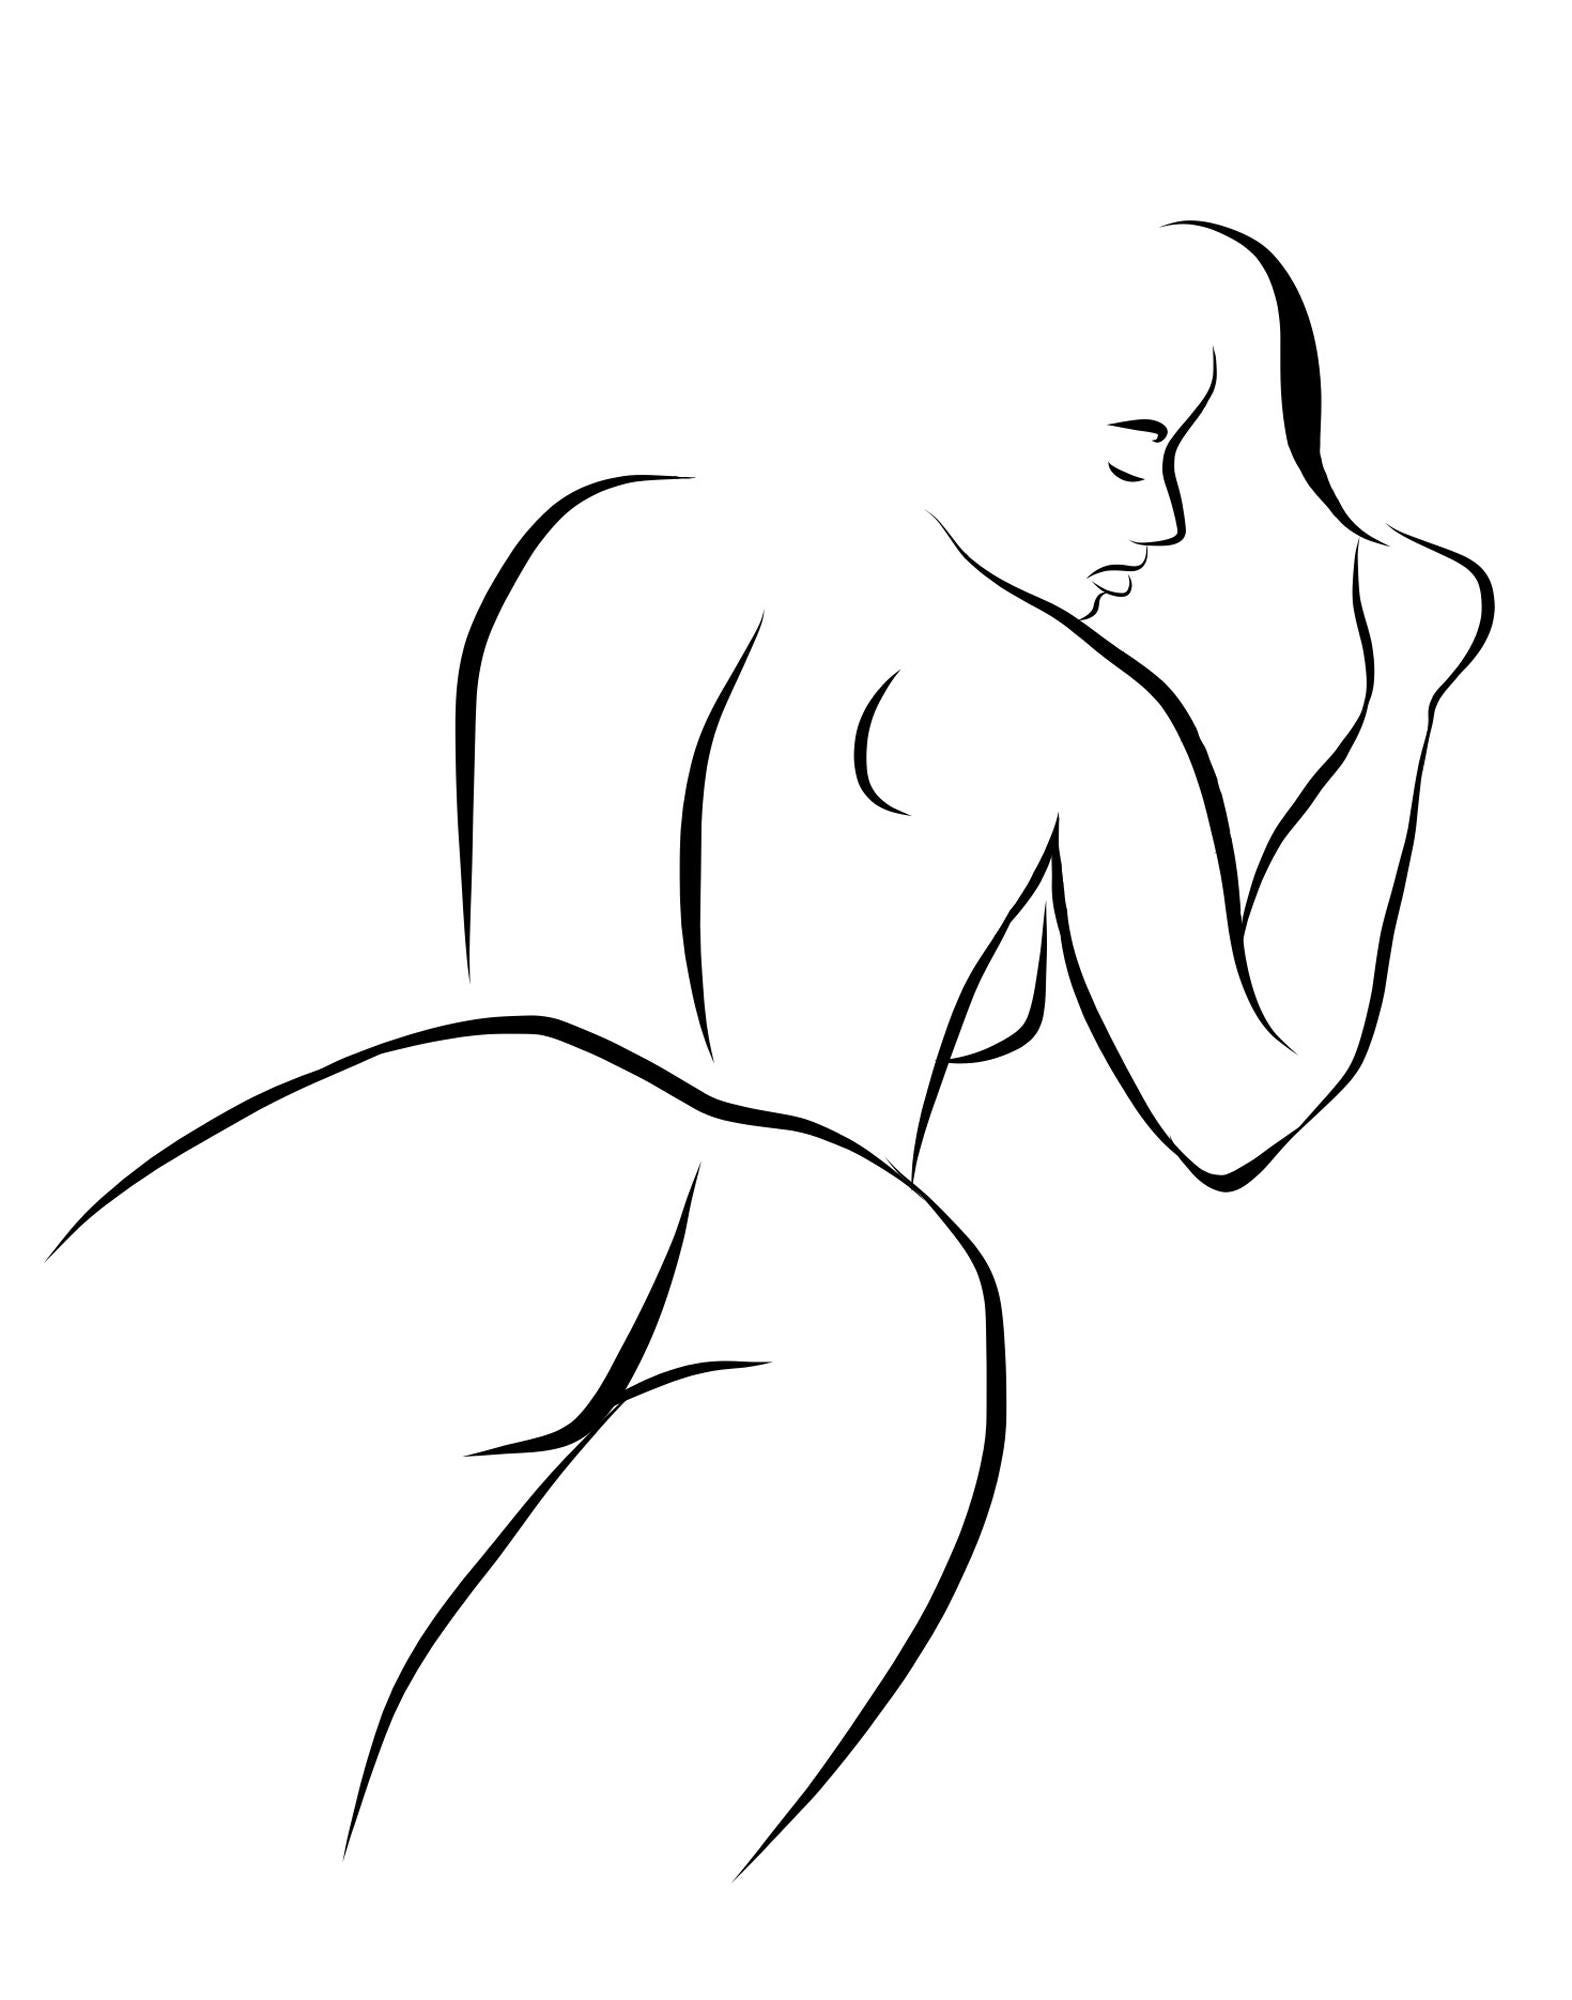 Michael Binkley Nude Print - Haiku #10   - Digital Vector Drawing B&W Reclining Female Nude Woman Figure